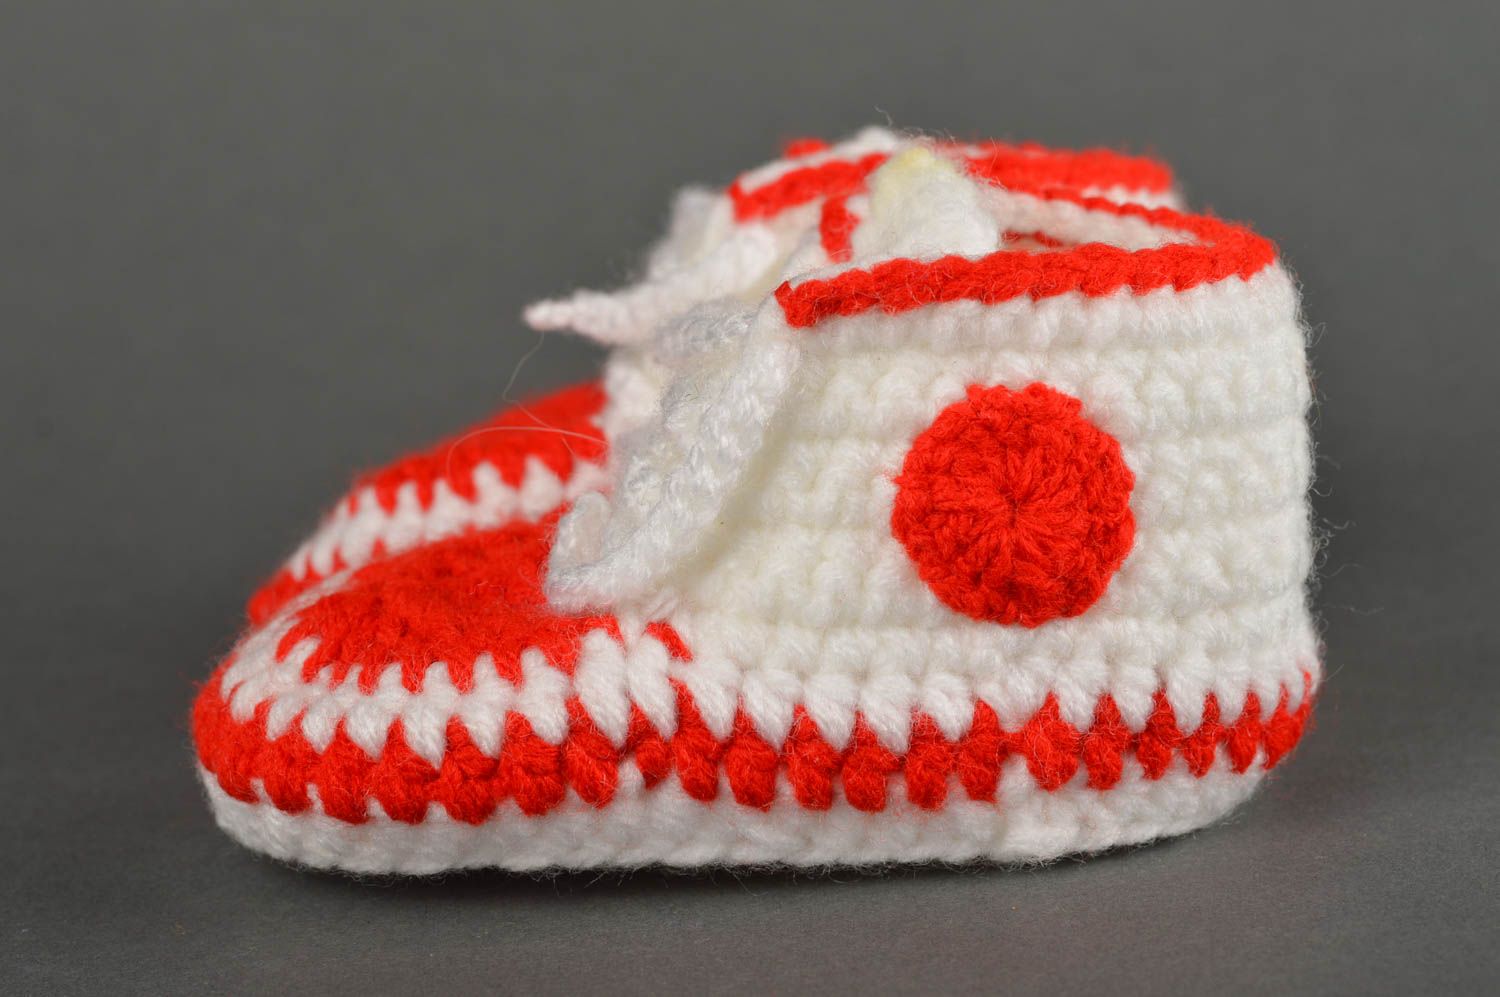 Handmade crocheted baby bootees warm kids footwear stylish shoes for newborns photo 2